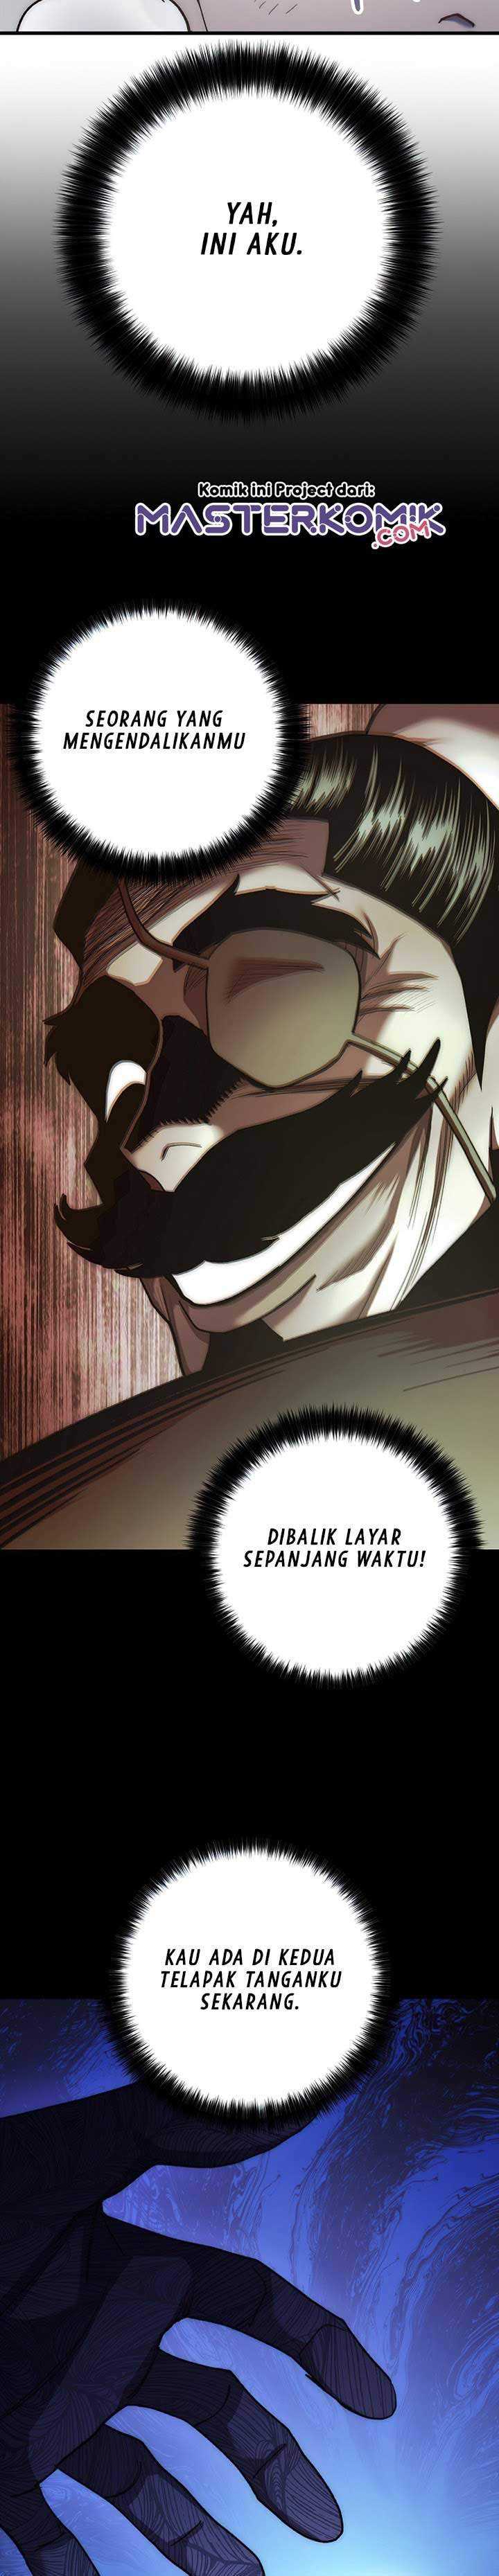 Legend Of Asura The Venom Dragon Chapter 57